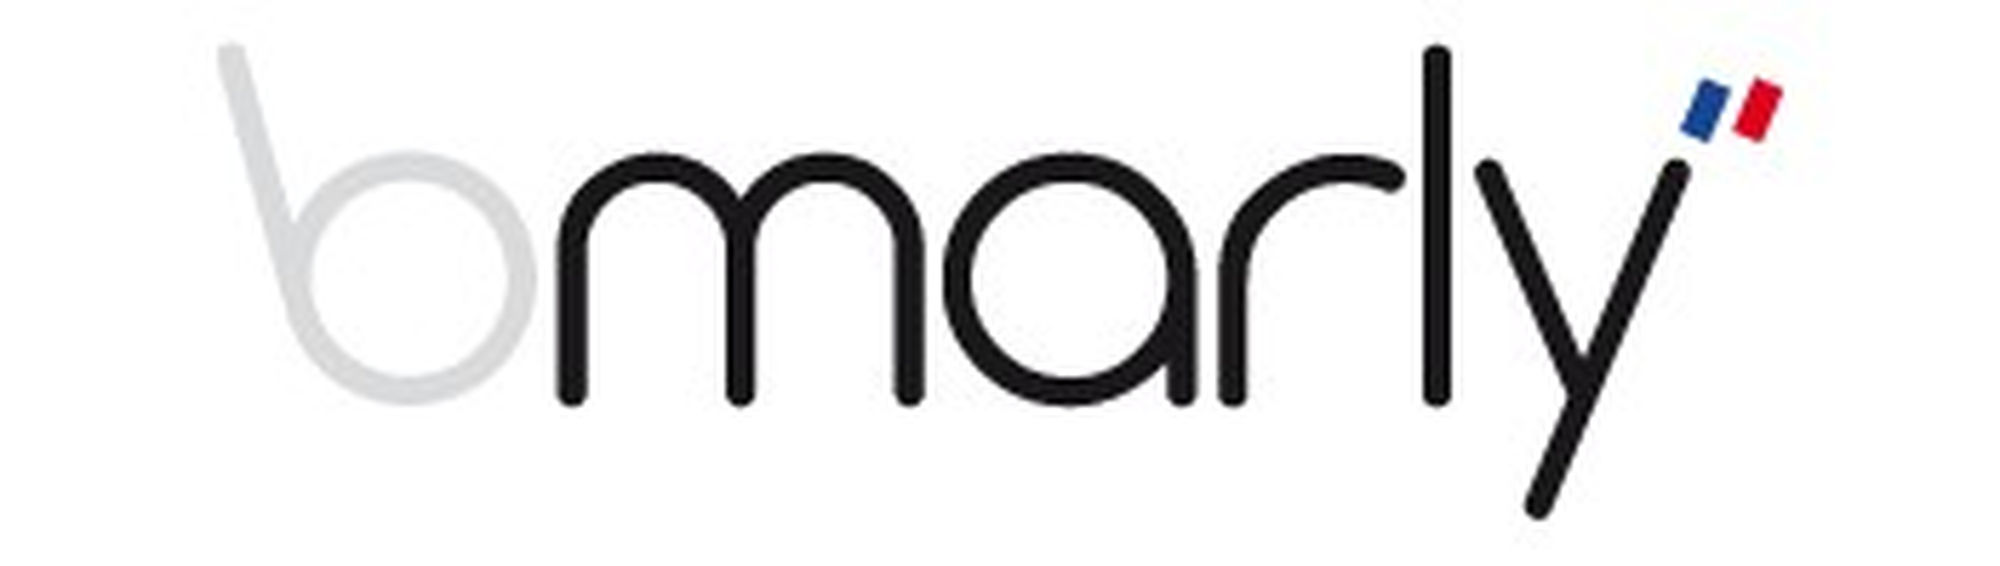 bmarly-logo.png